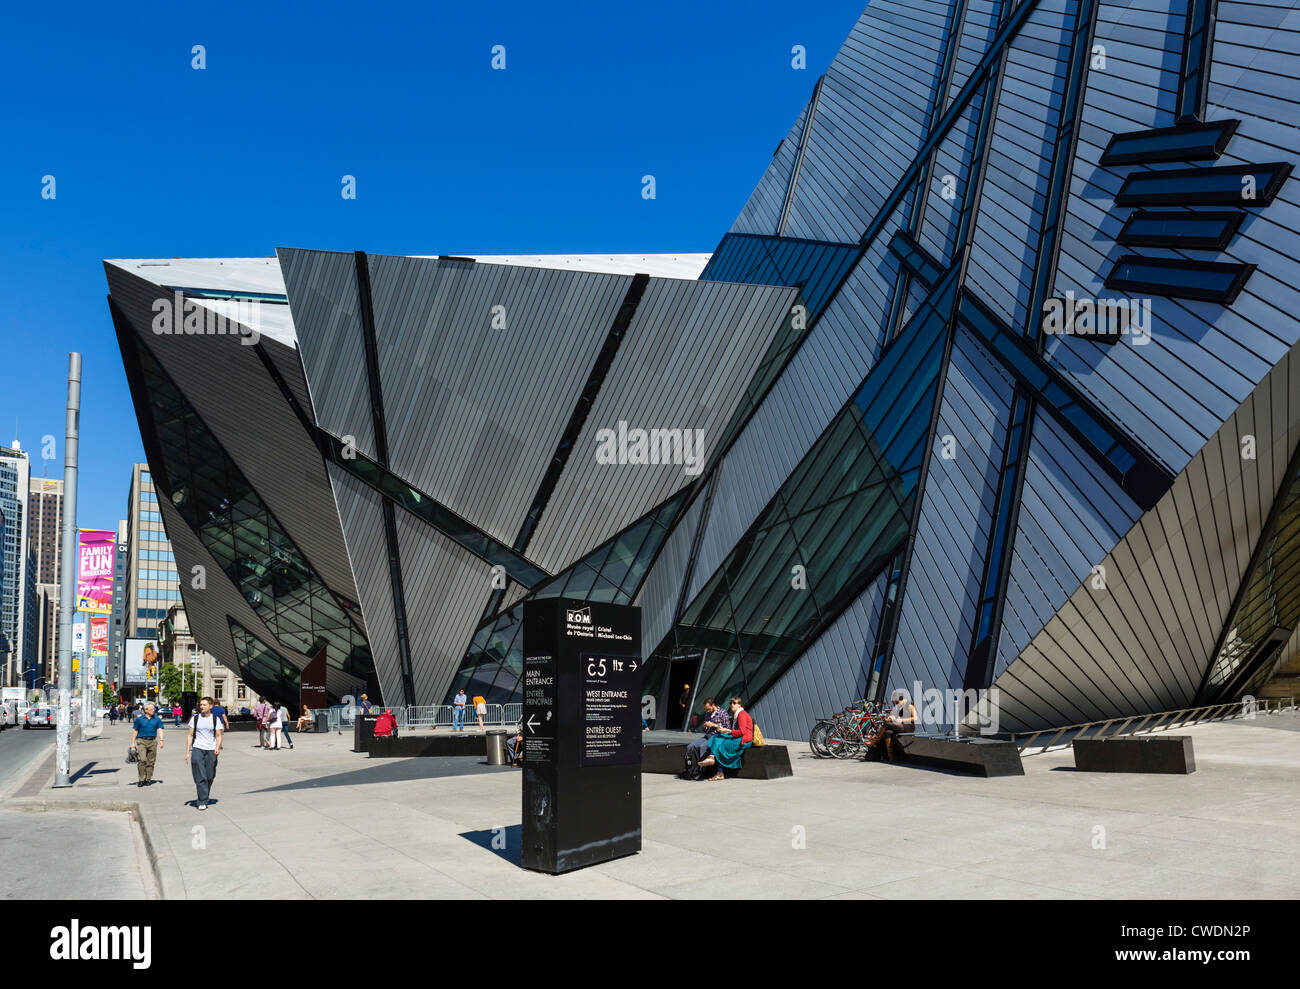 Michael Le mento Crystal ingresso al Royal Ontario Museum, progettato da Daniel Libeskind, Bloor St, Toronto, Ontario, Canada Foto Stock